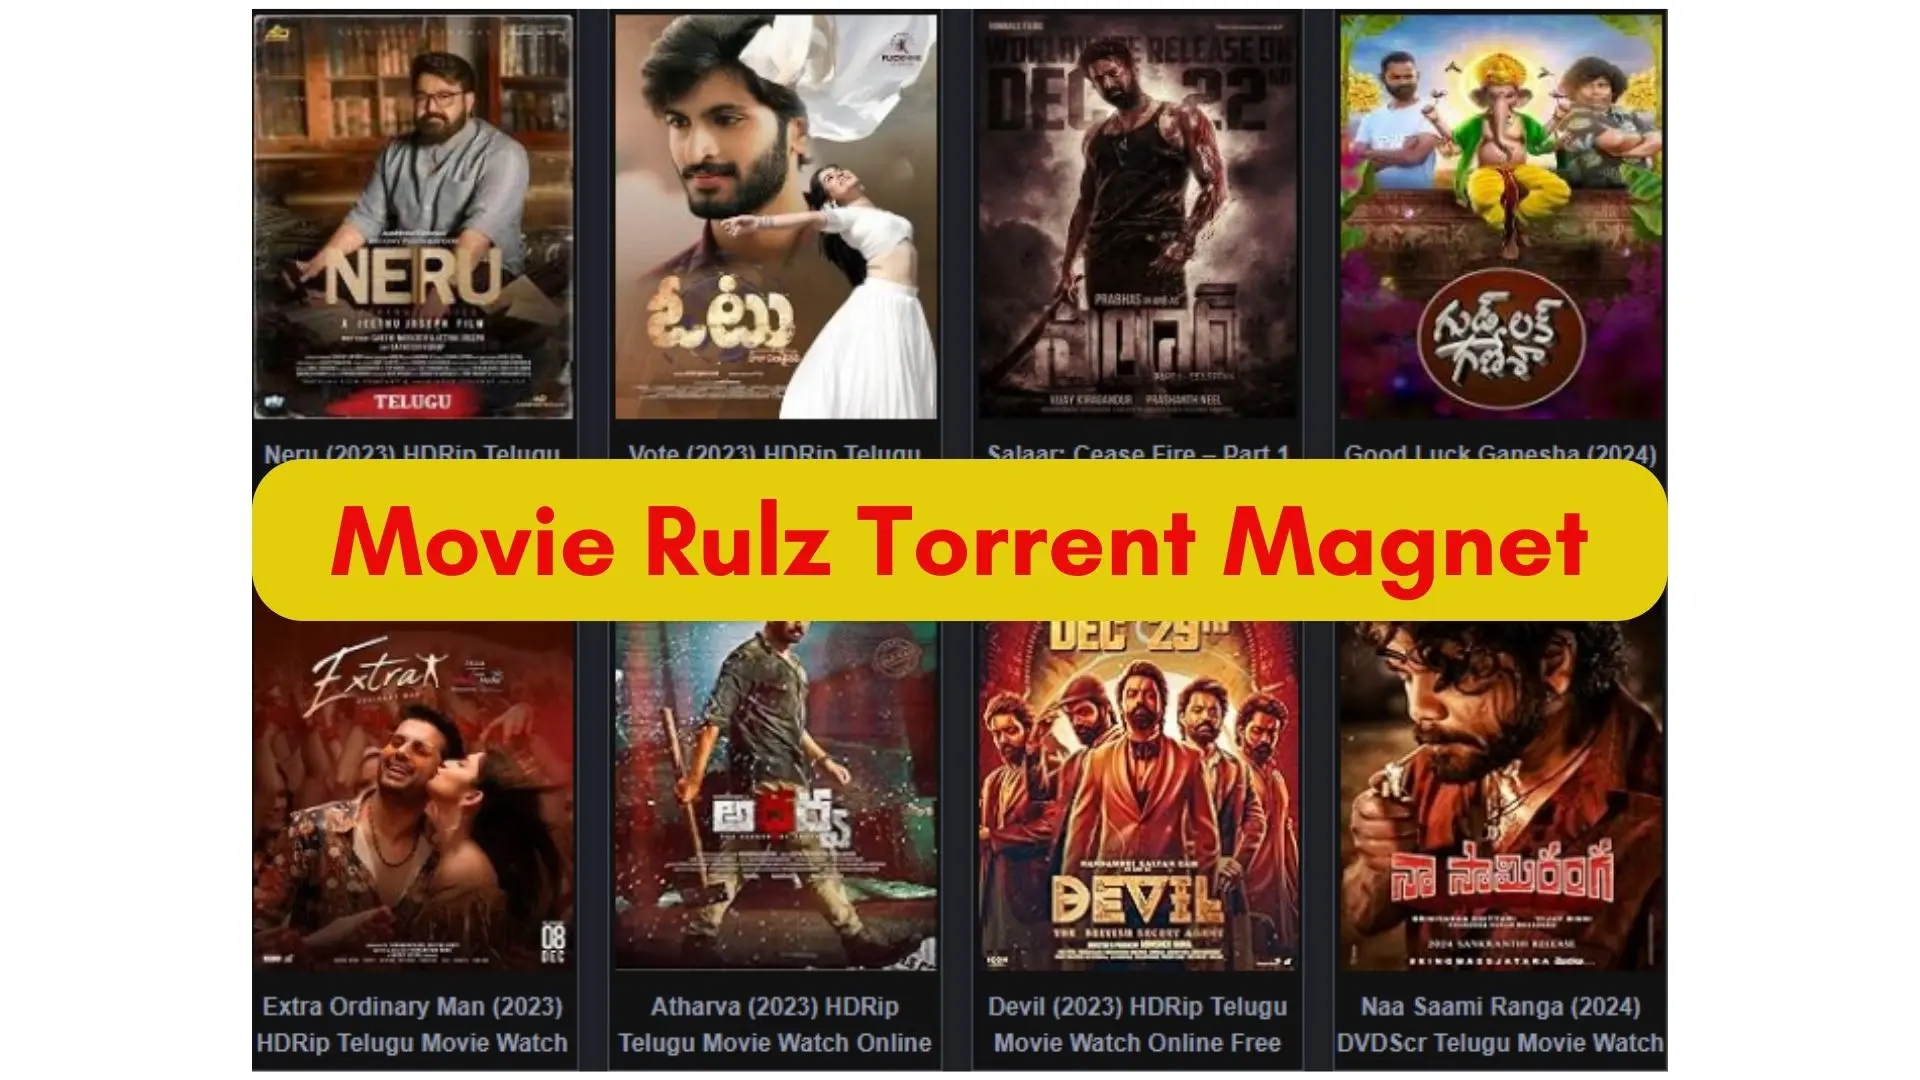 Movie Rulz Torrent Magnet